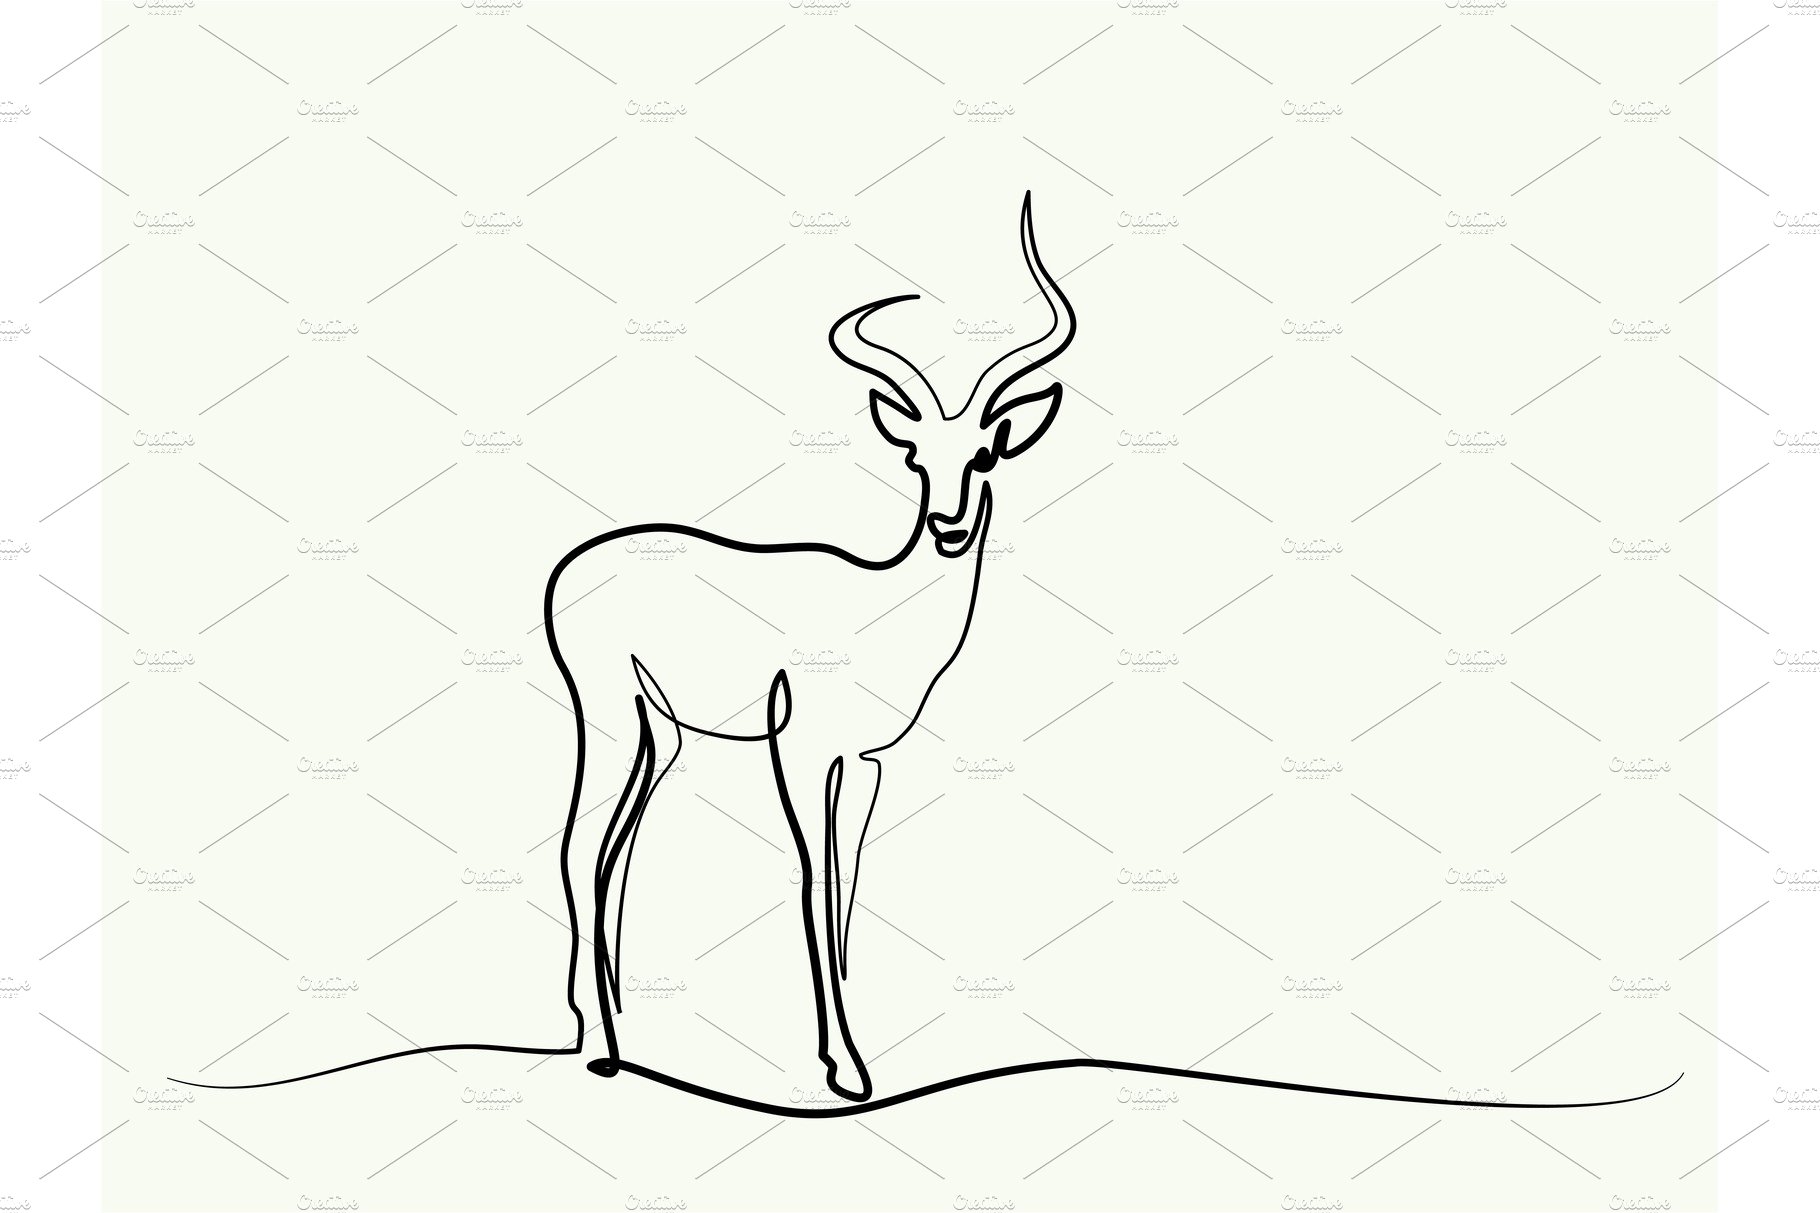 Impala symbol one line drawing cover image.